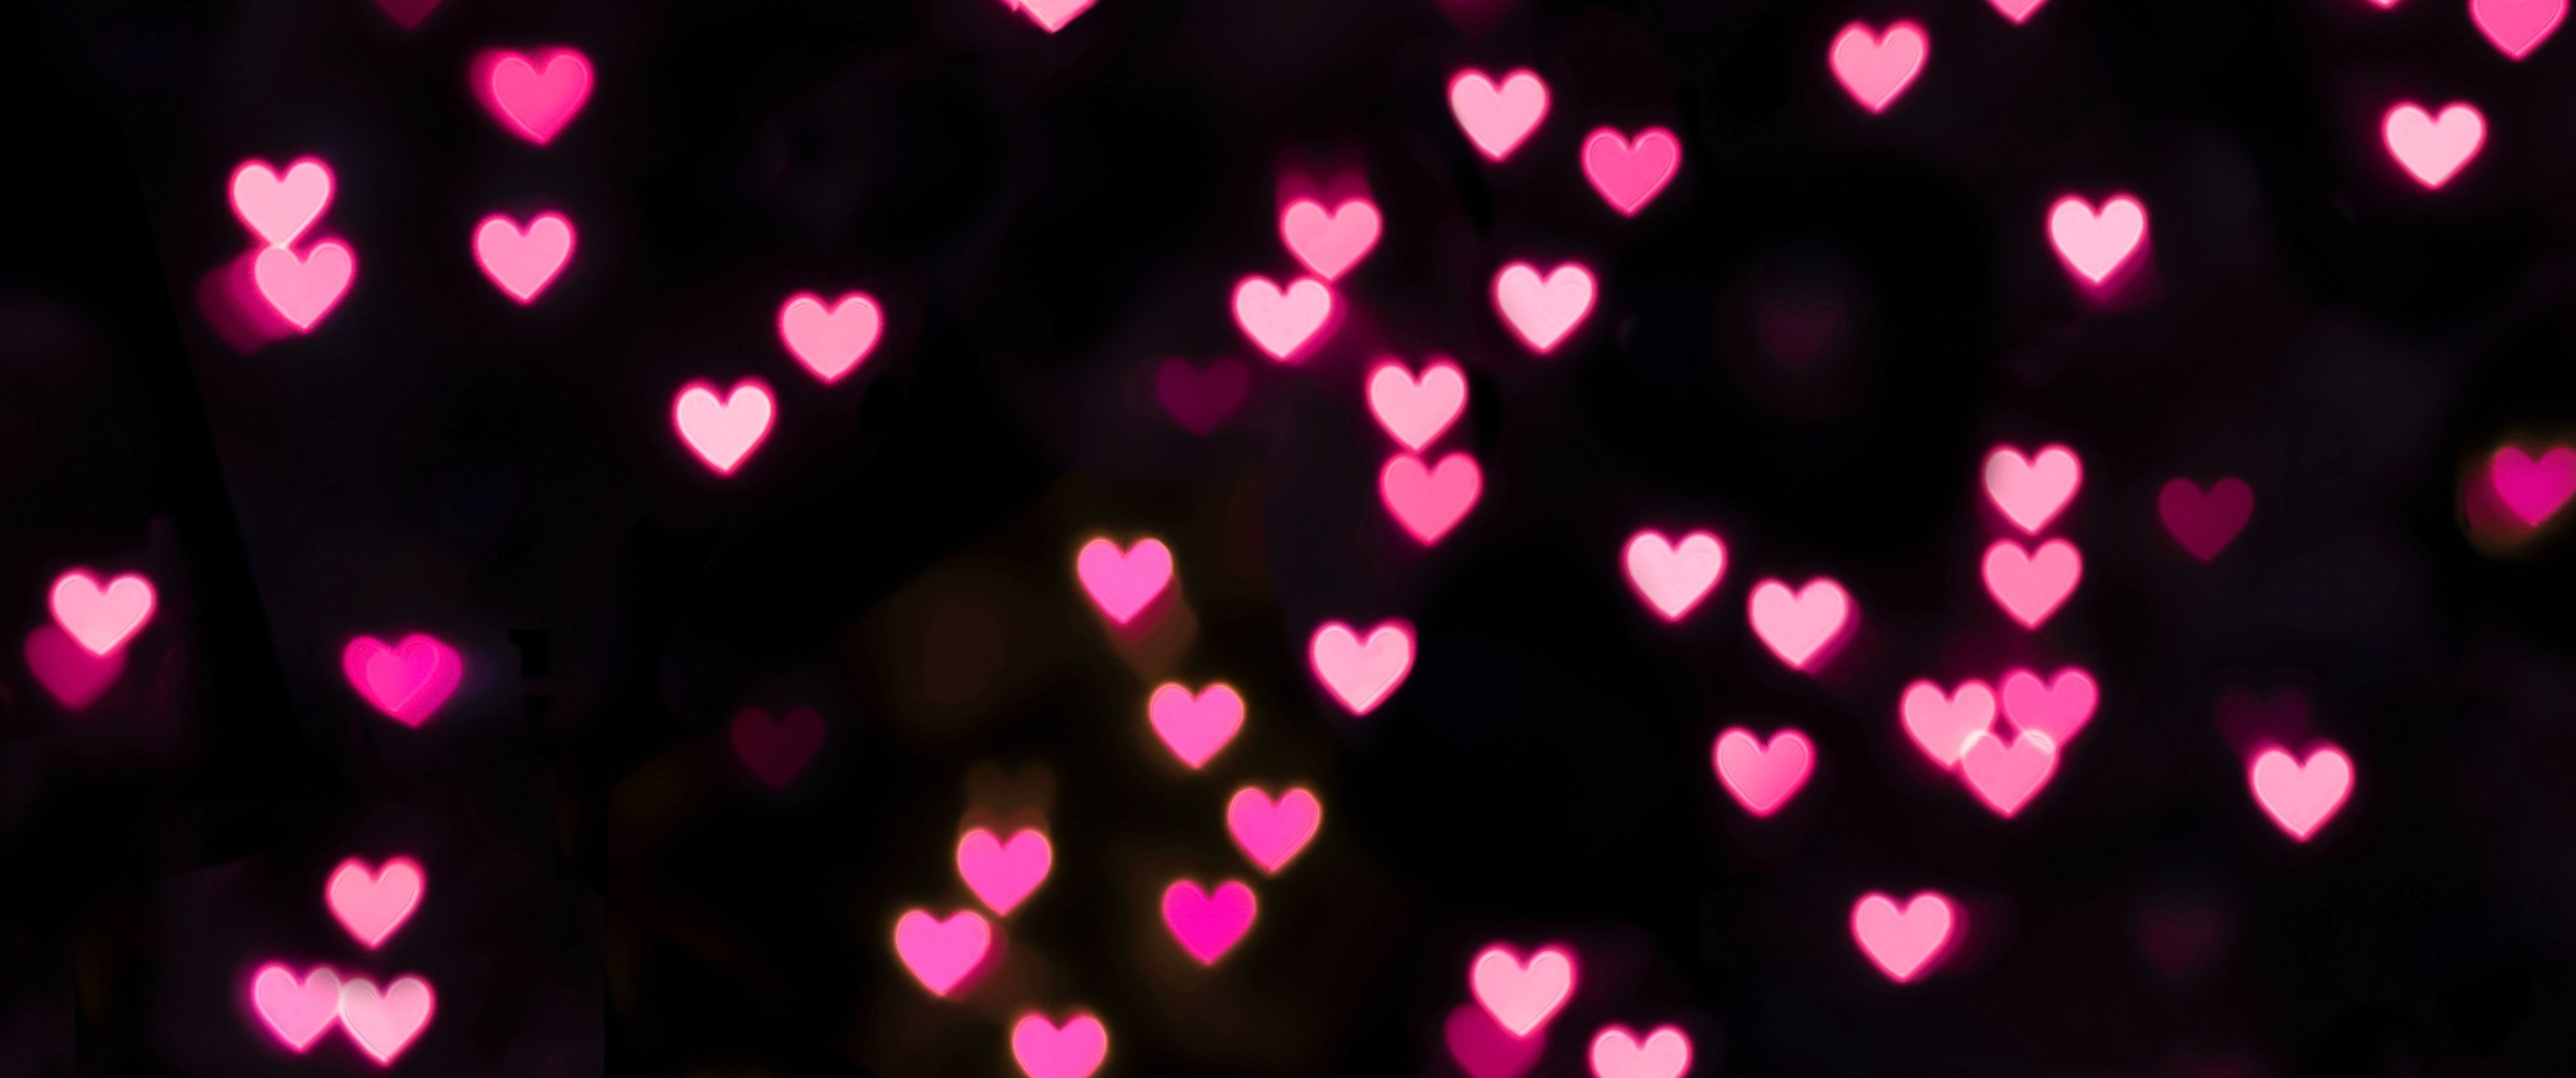 Pink Hearts Wallpaper 4K, Black Background, Bokeh, Glowing Lights, Vibrant, Black Dark